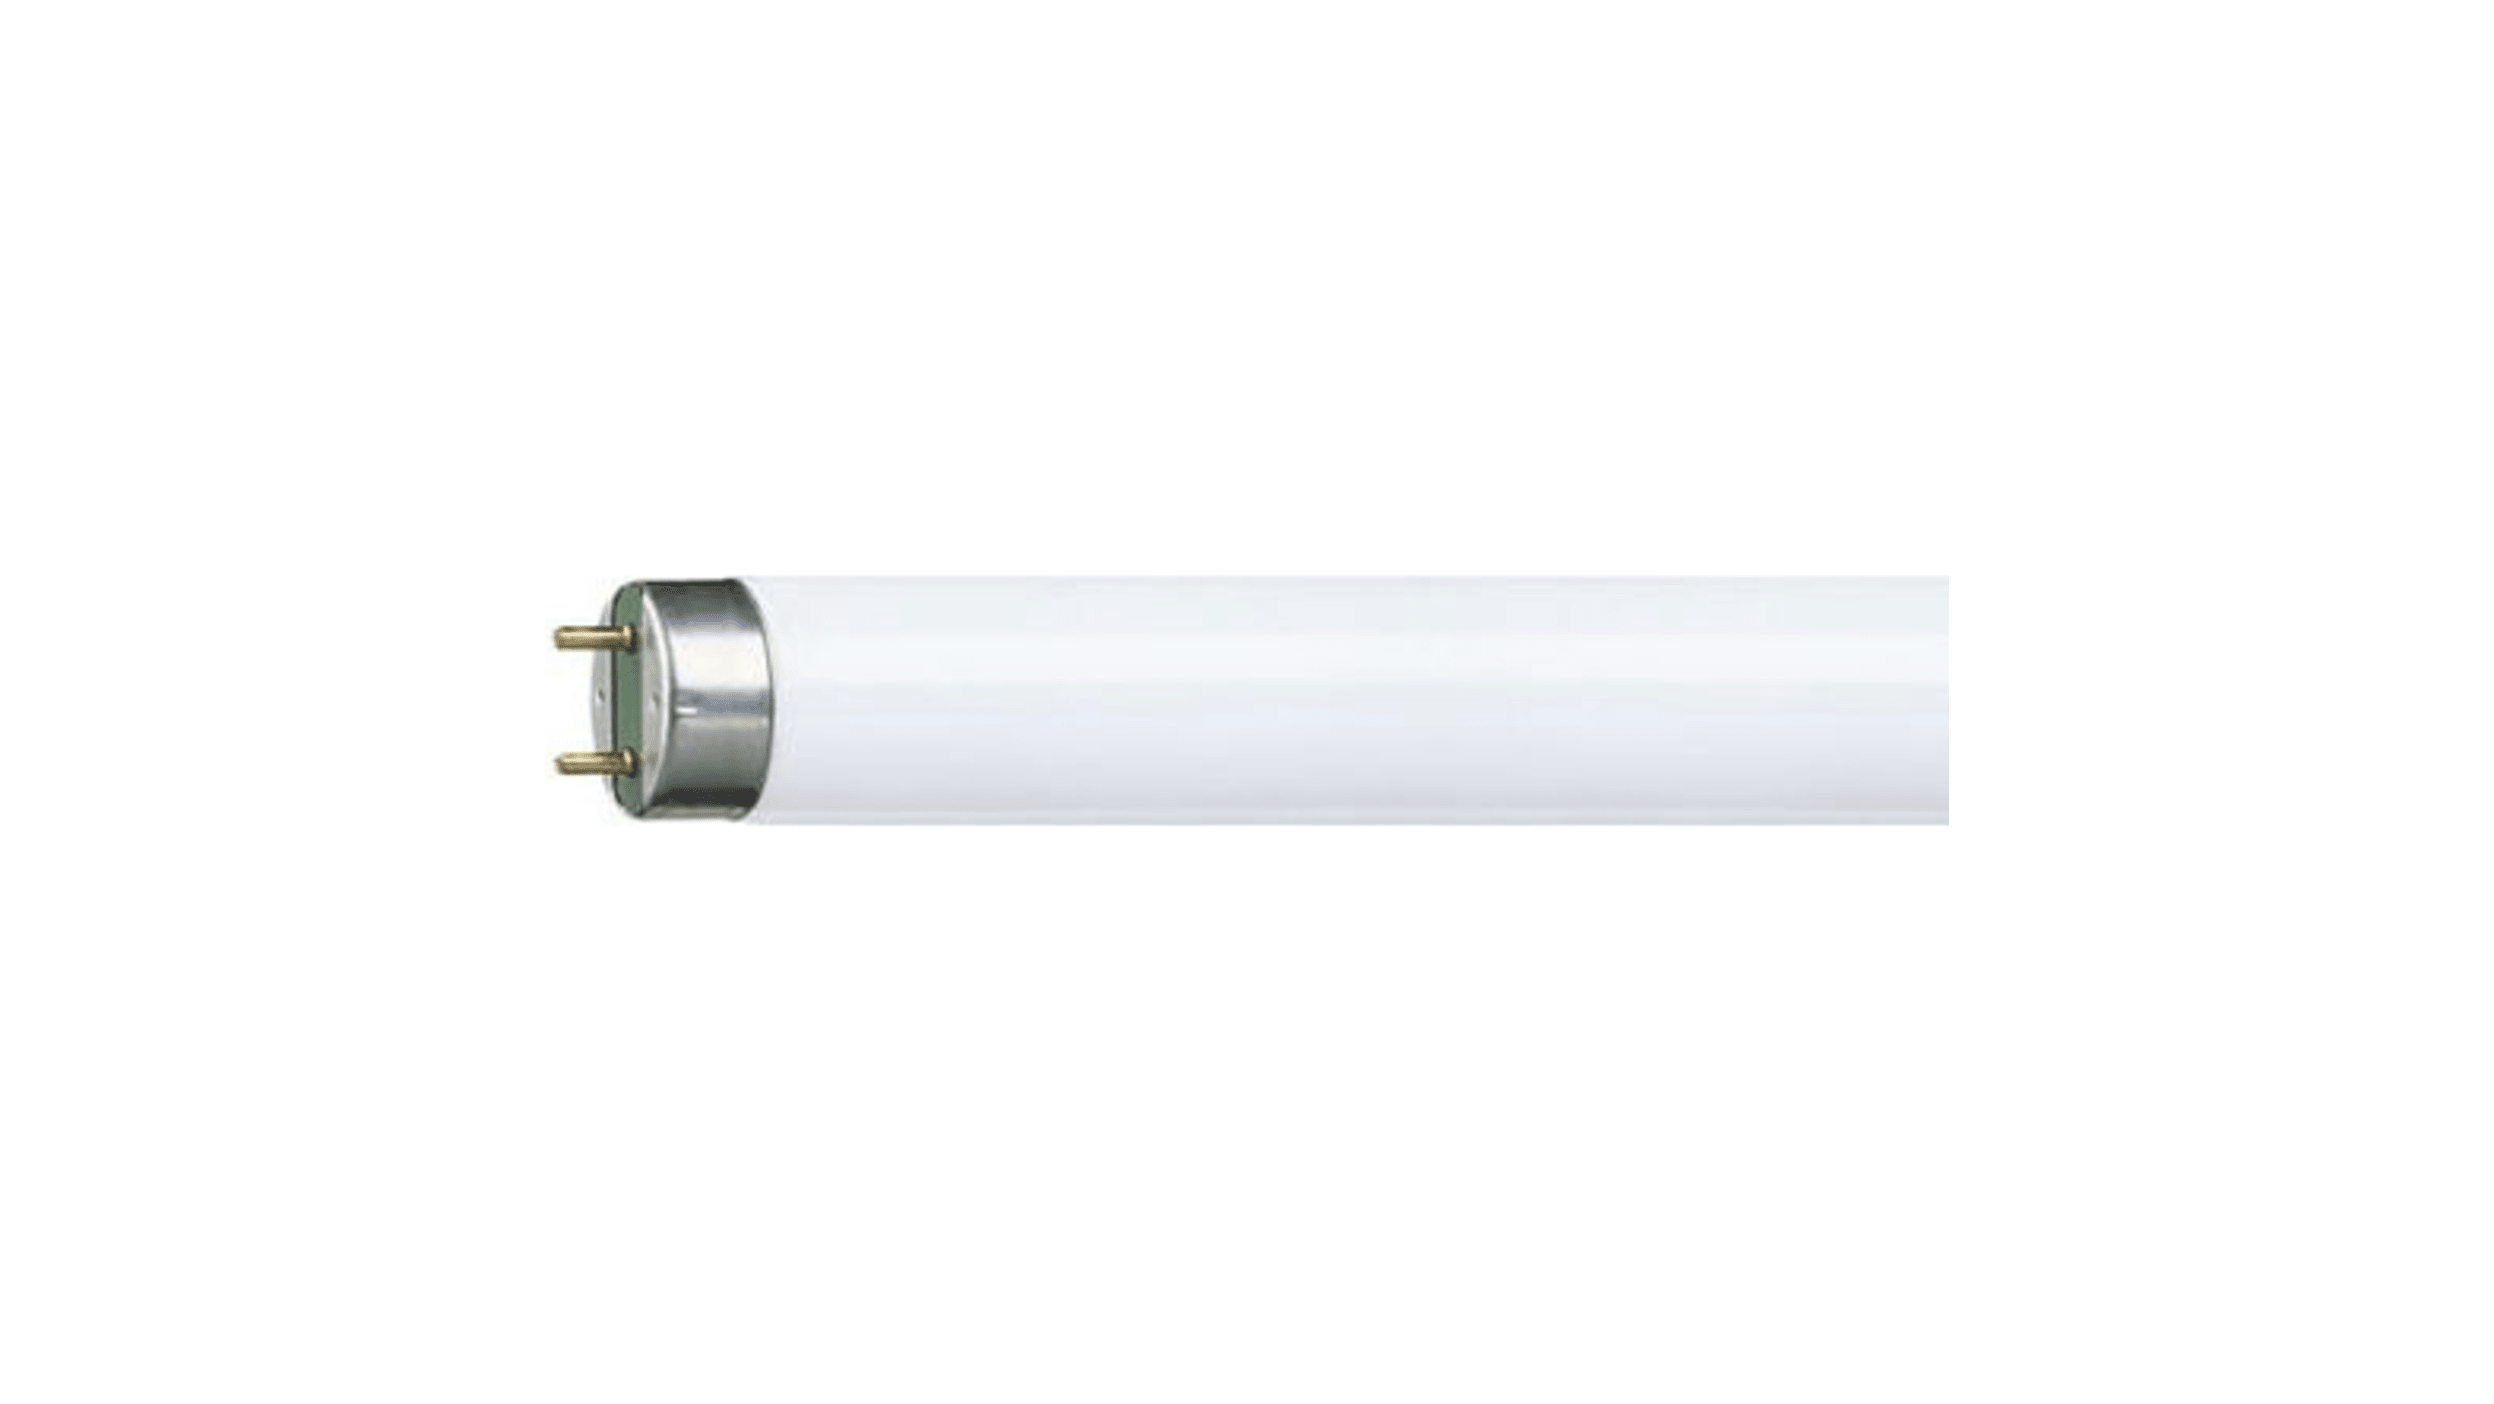 Philips Lighting 18 W T8 Fluorescent Tube, 1300 lm, 600mm, G13, 18865 (25)